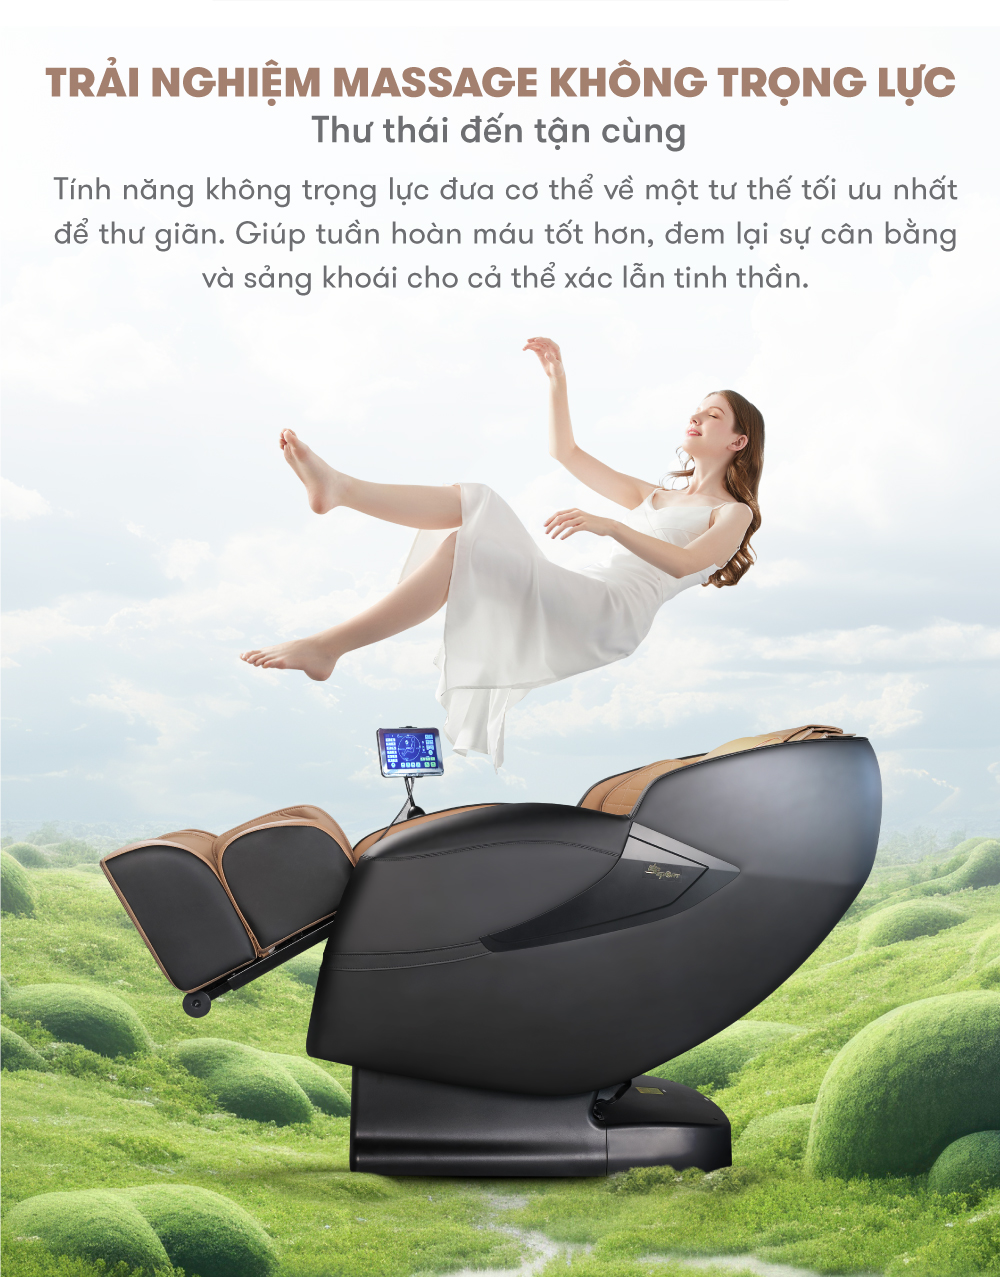 ghế massage elip ares new